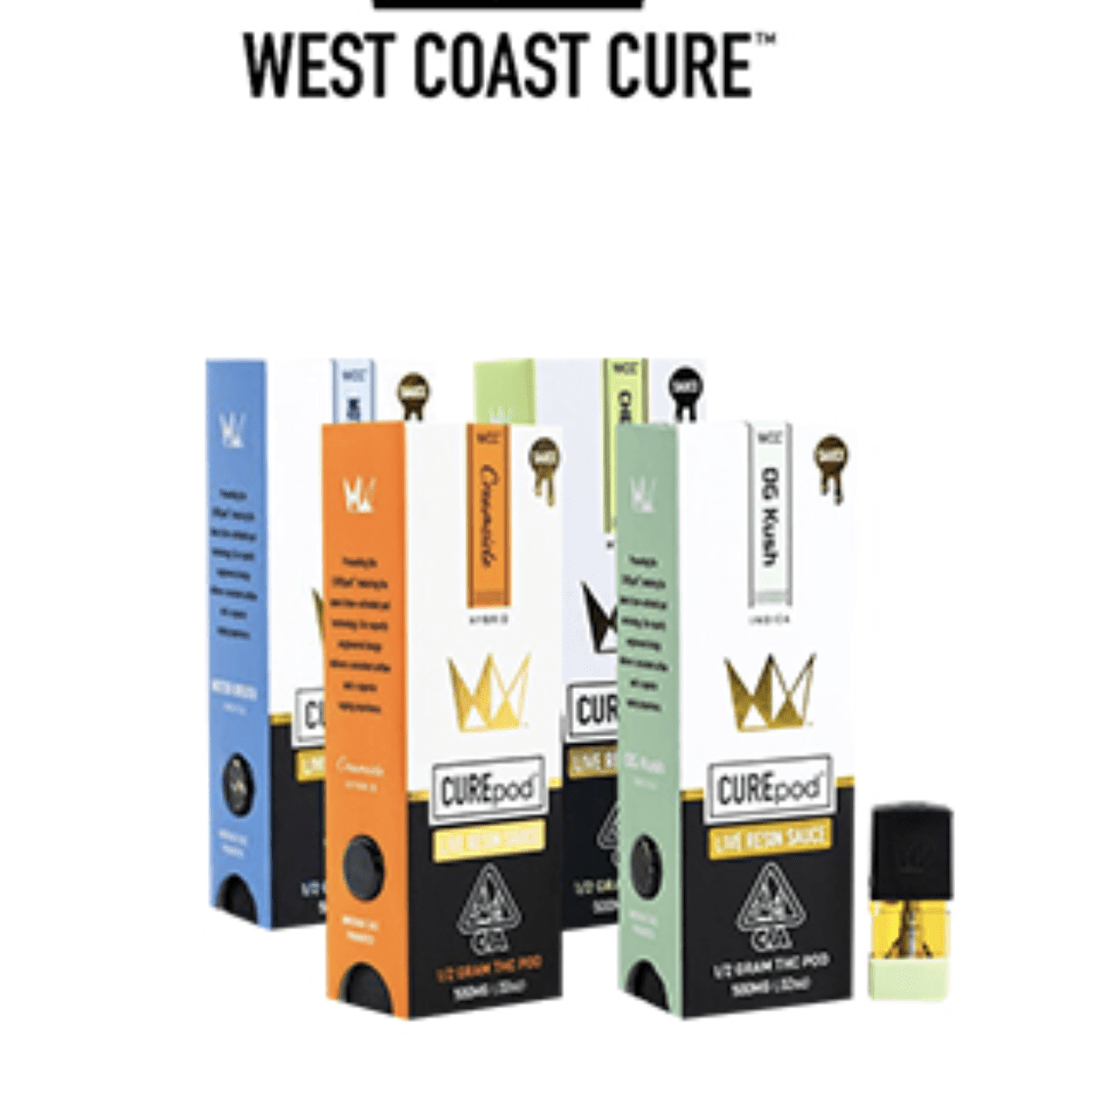 WCC Vape Cartridge OG Kush Live Resin Sauce CurePod 0.5g (5/case)